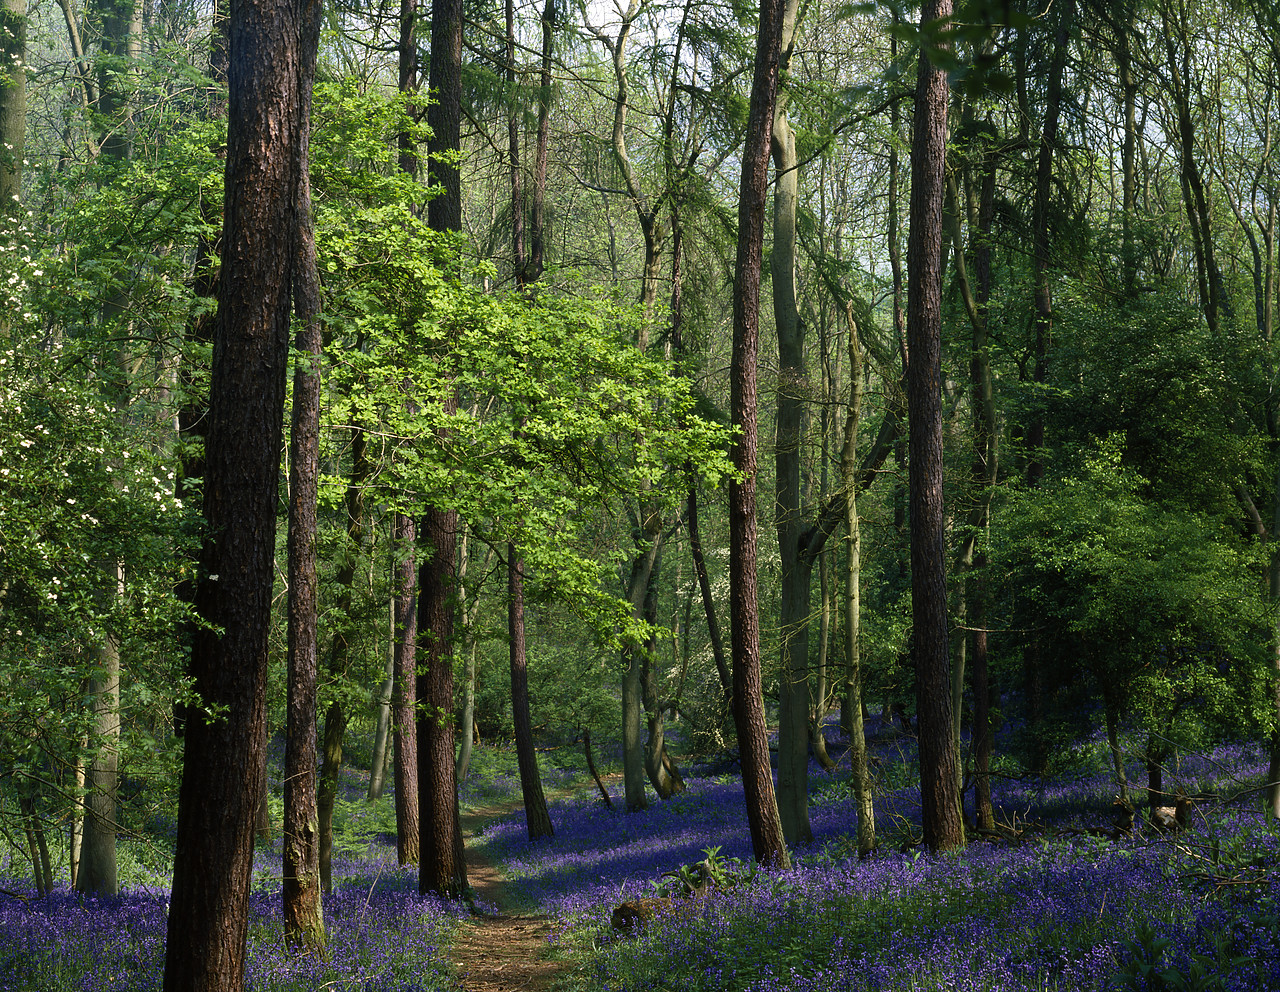 #924016-1 - Bluebell Wood, Malvern Hills, Worcestershire, England